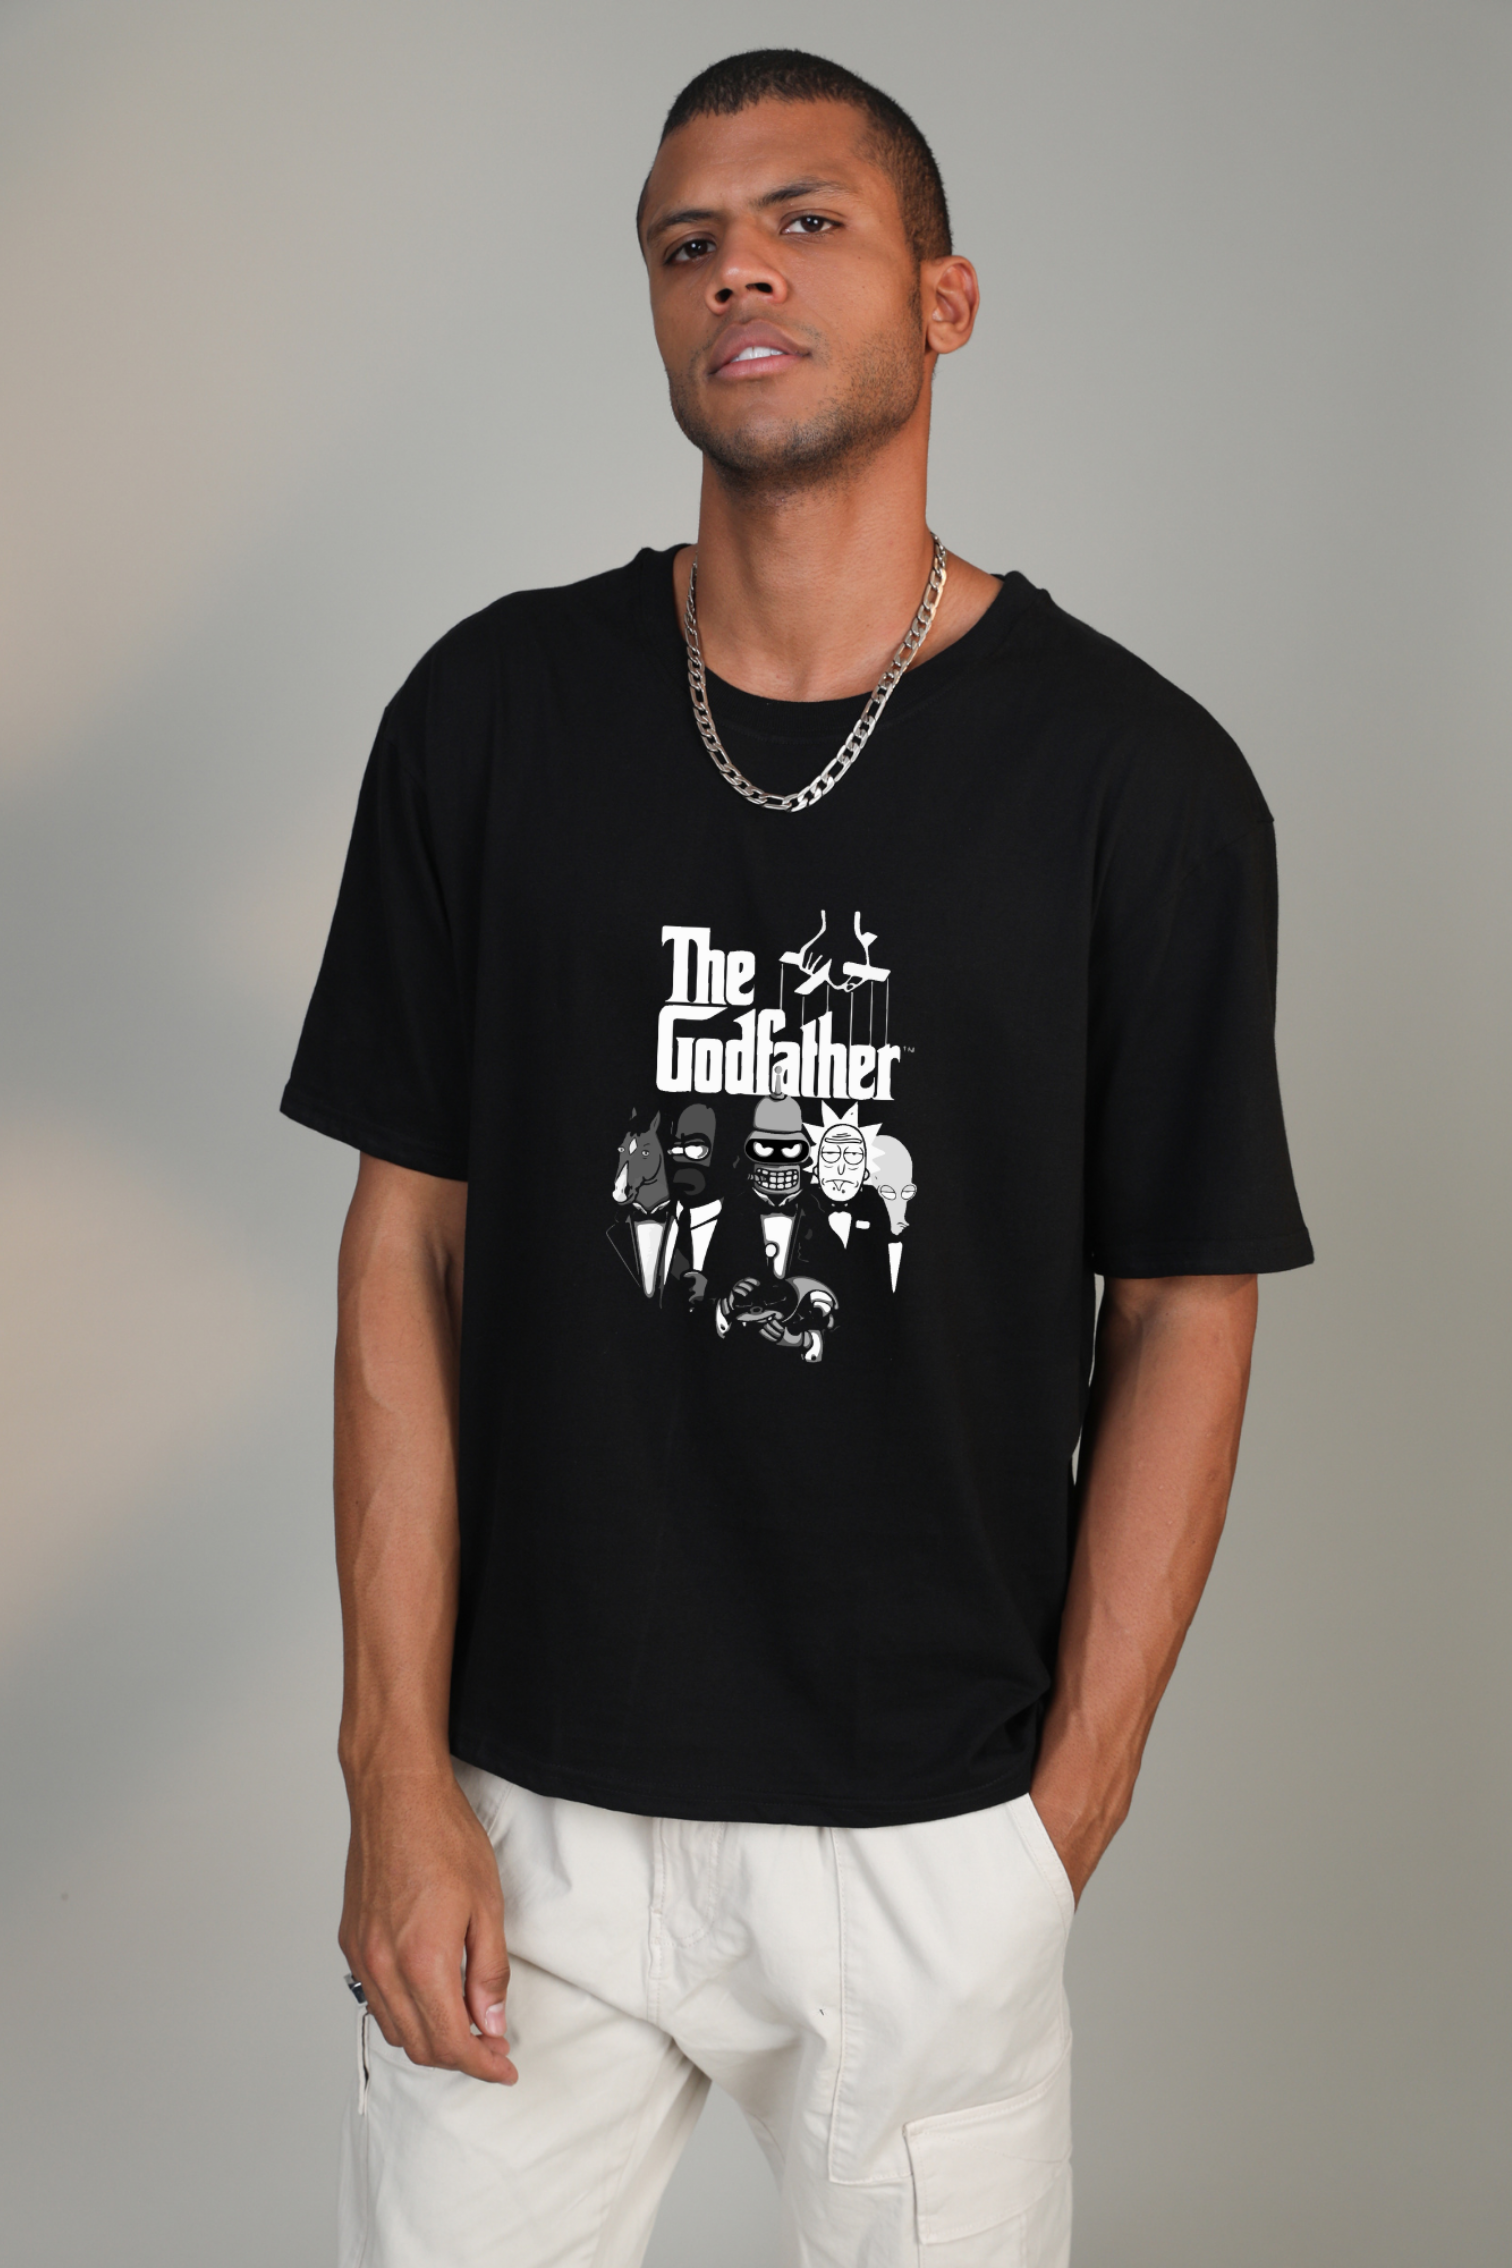 The Godfather- Oversized t-shirt